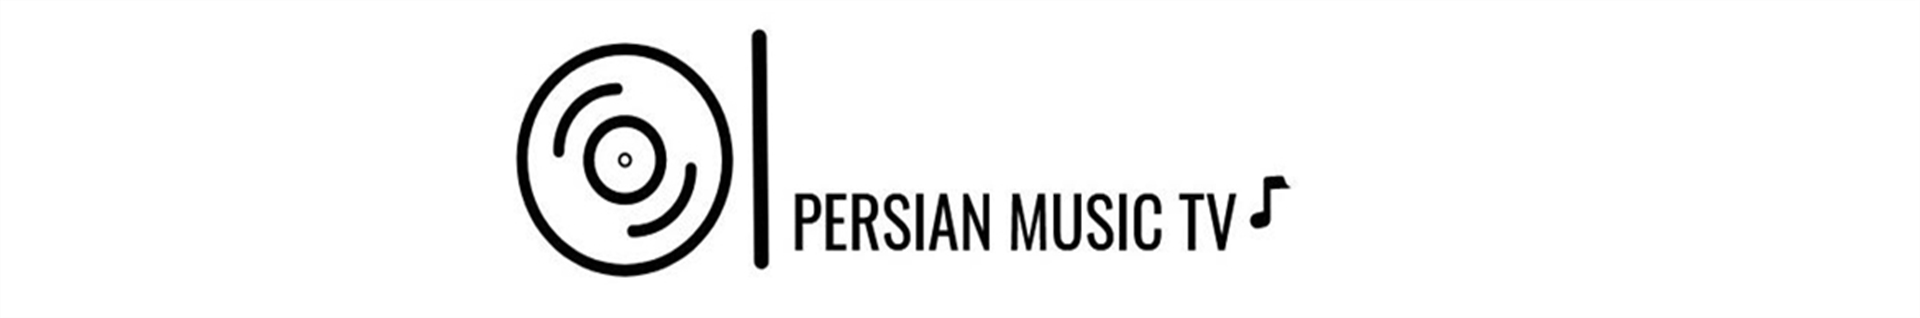 persian music TV